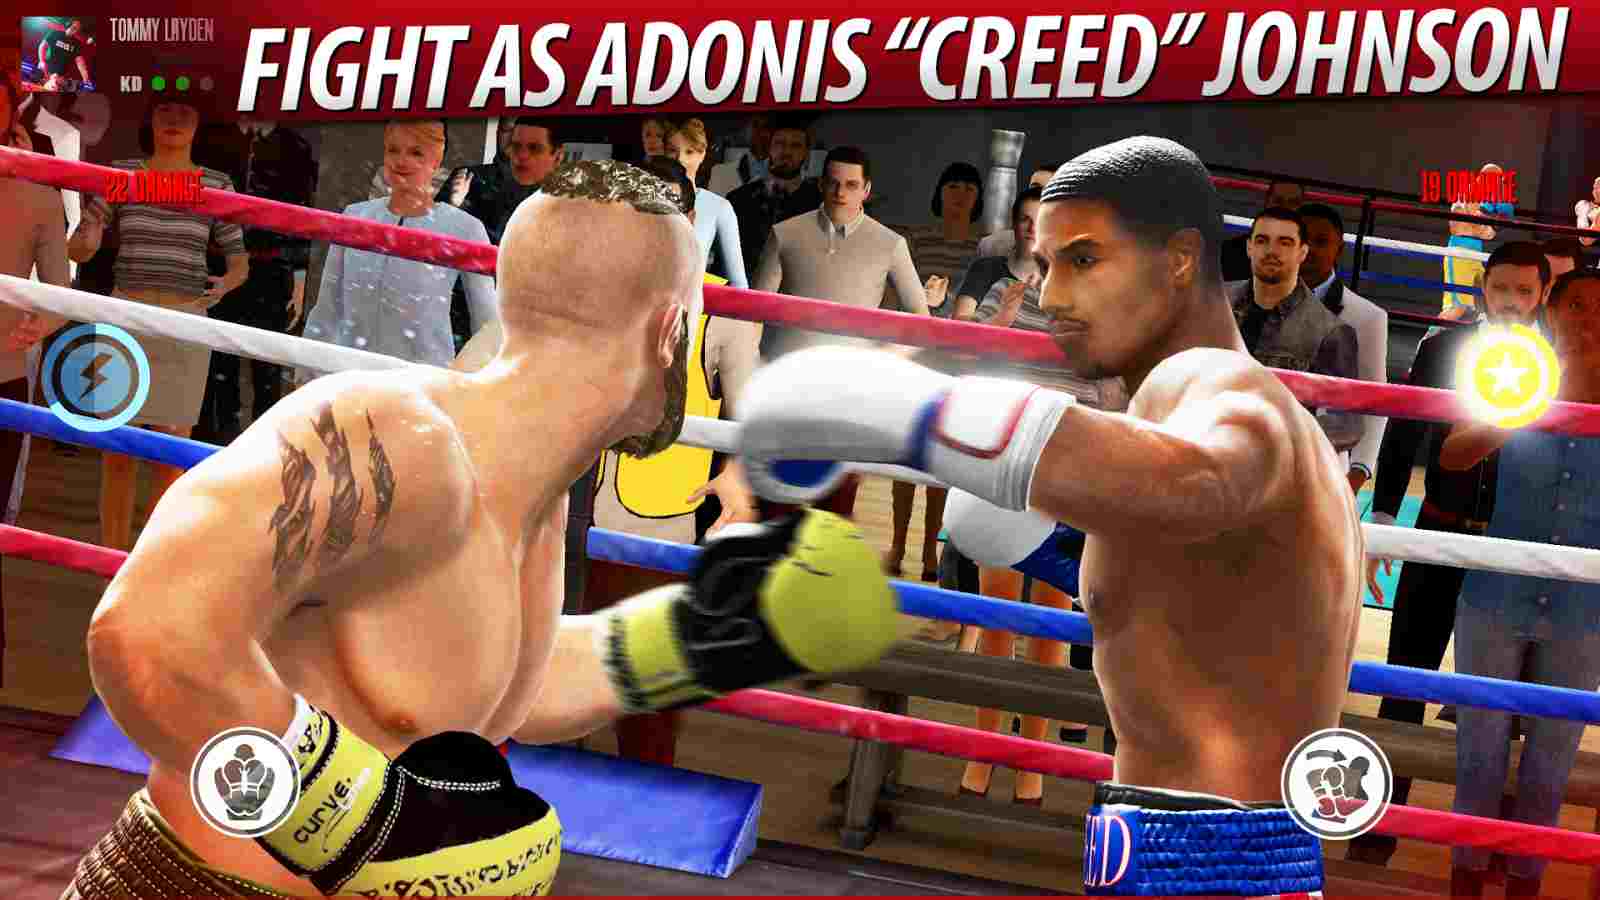 Real Boxing 2 ROCKY screenshot 3